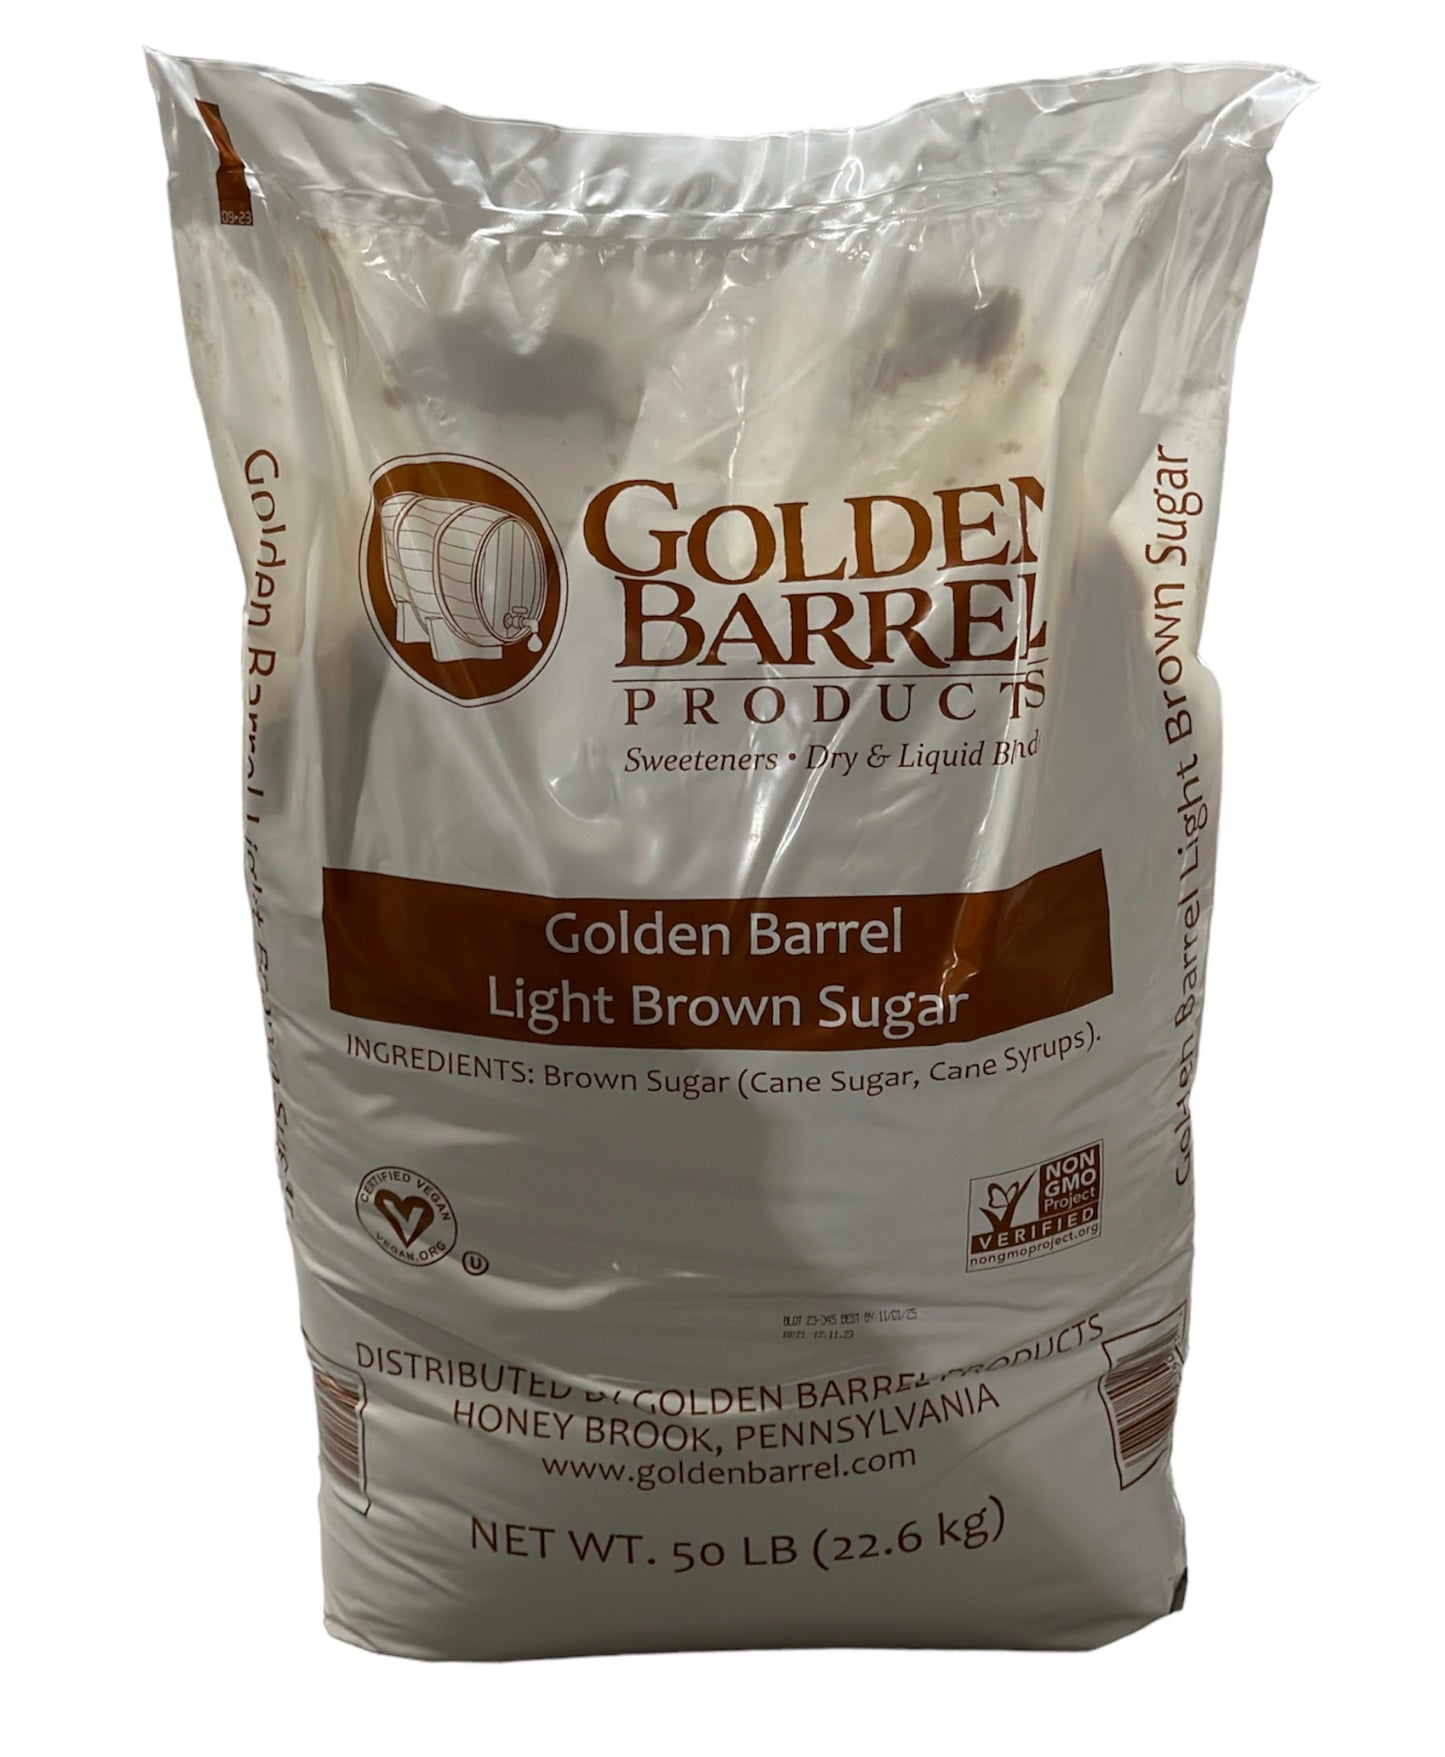 Golden Barrel Light Brown Sugar